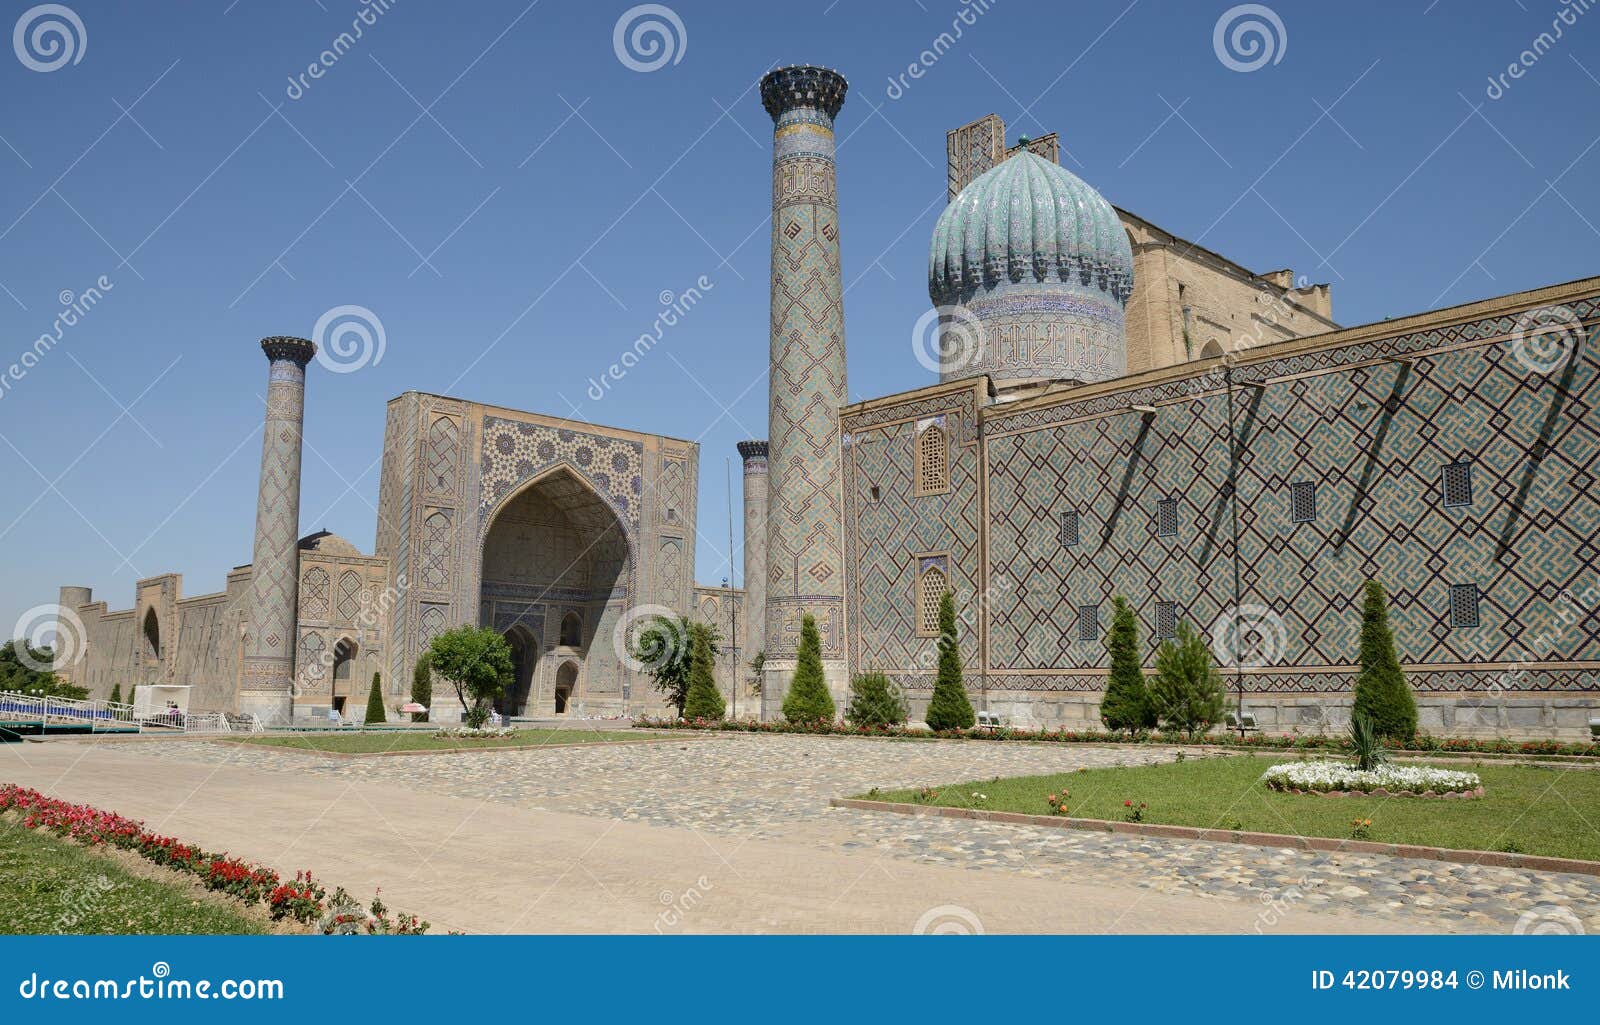 minarets of registan, samarkand